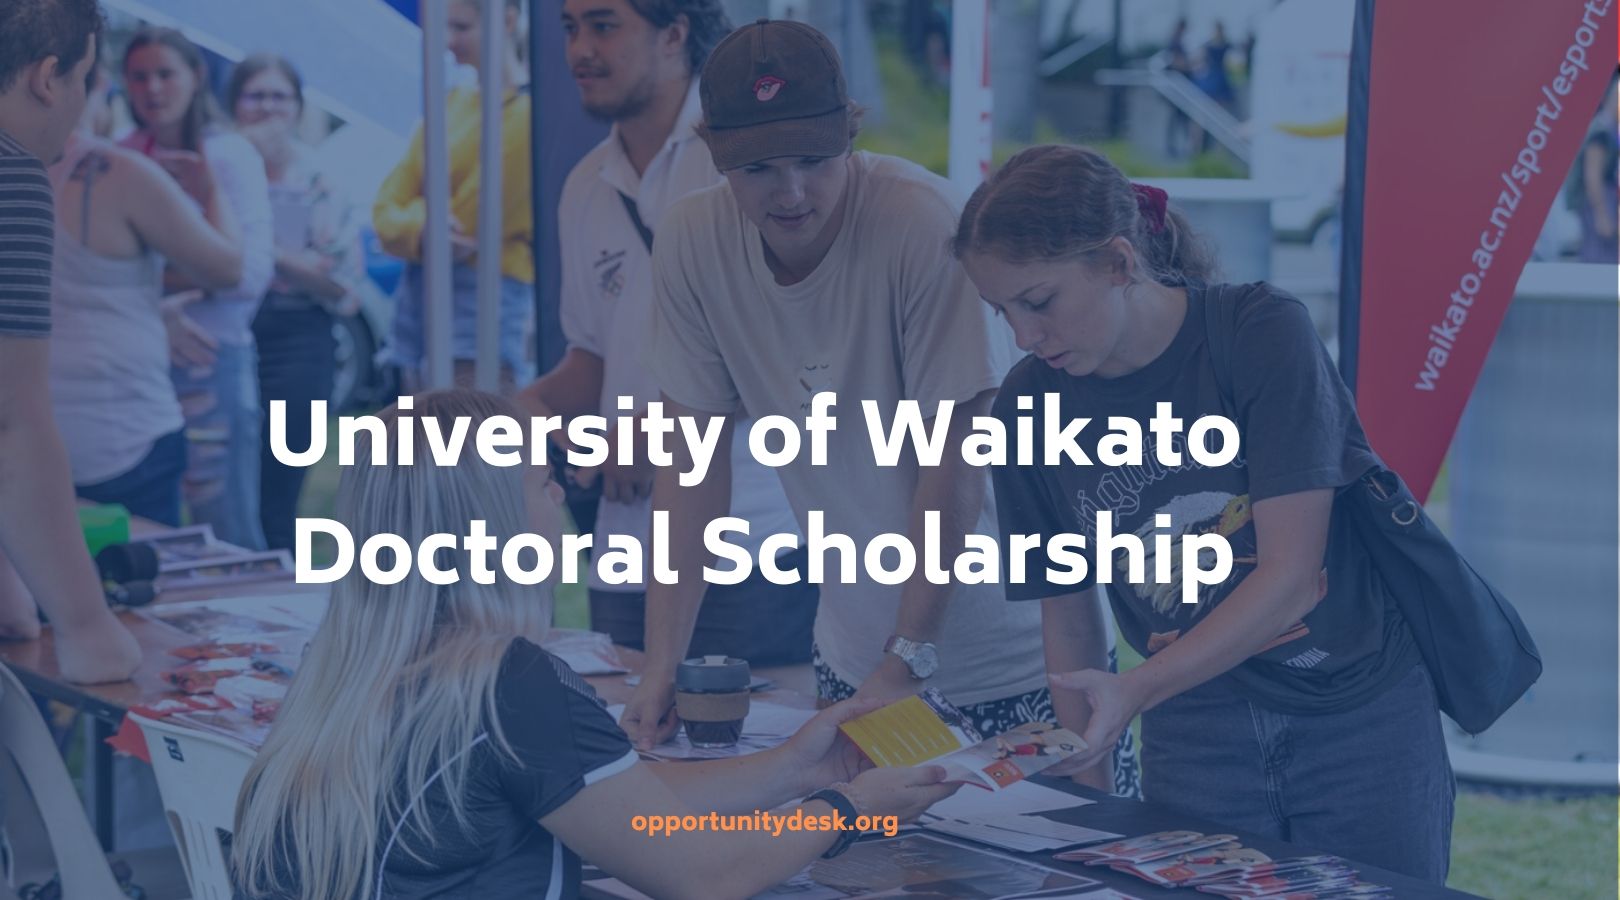 University of Waikato Doctoral Scholarship 2020 to Study in New Zealand